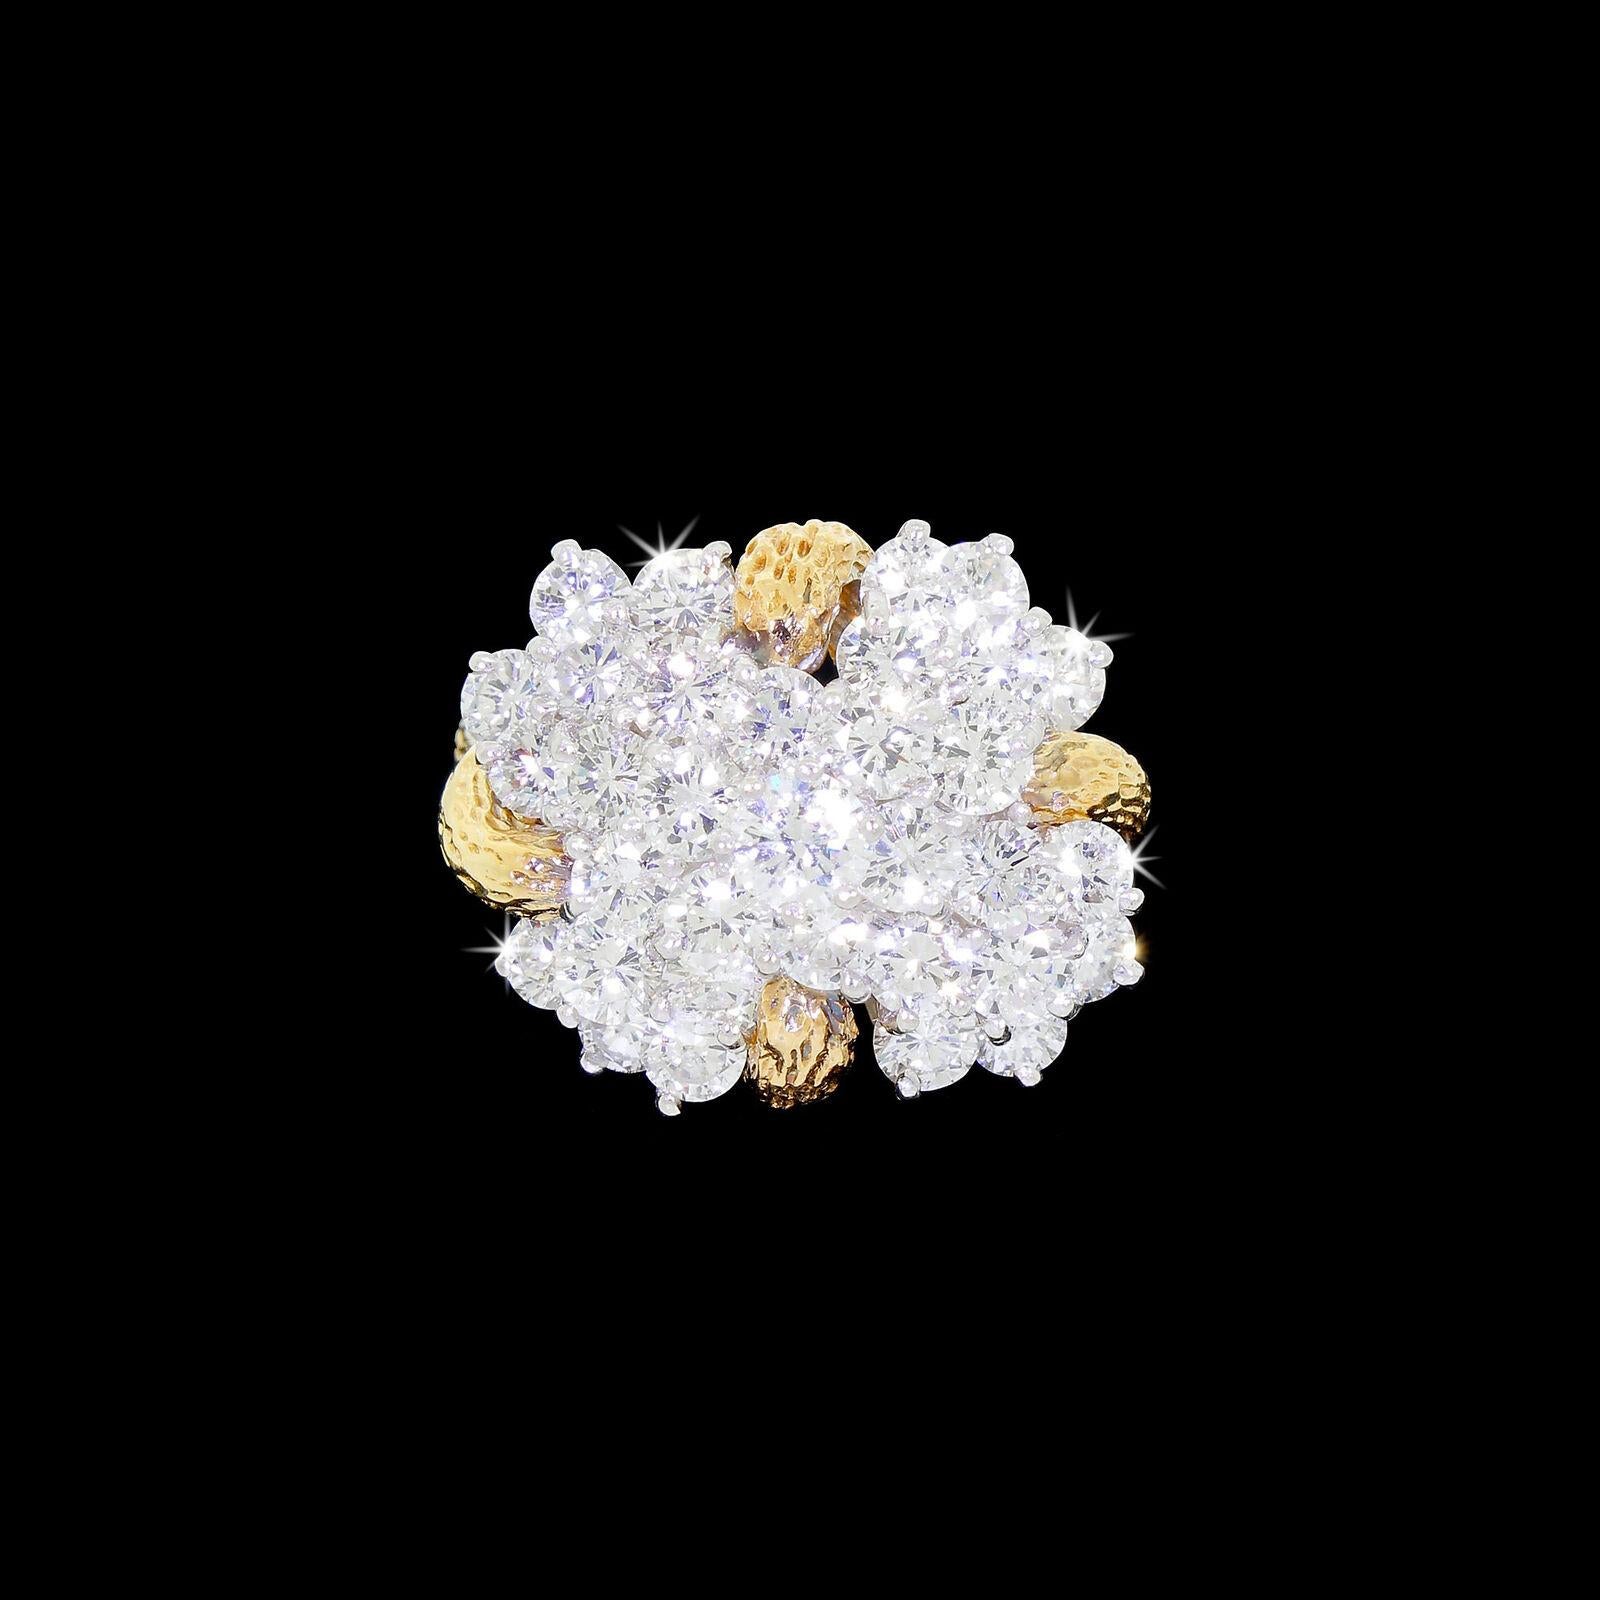 3 carat diamond cluster ring